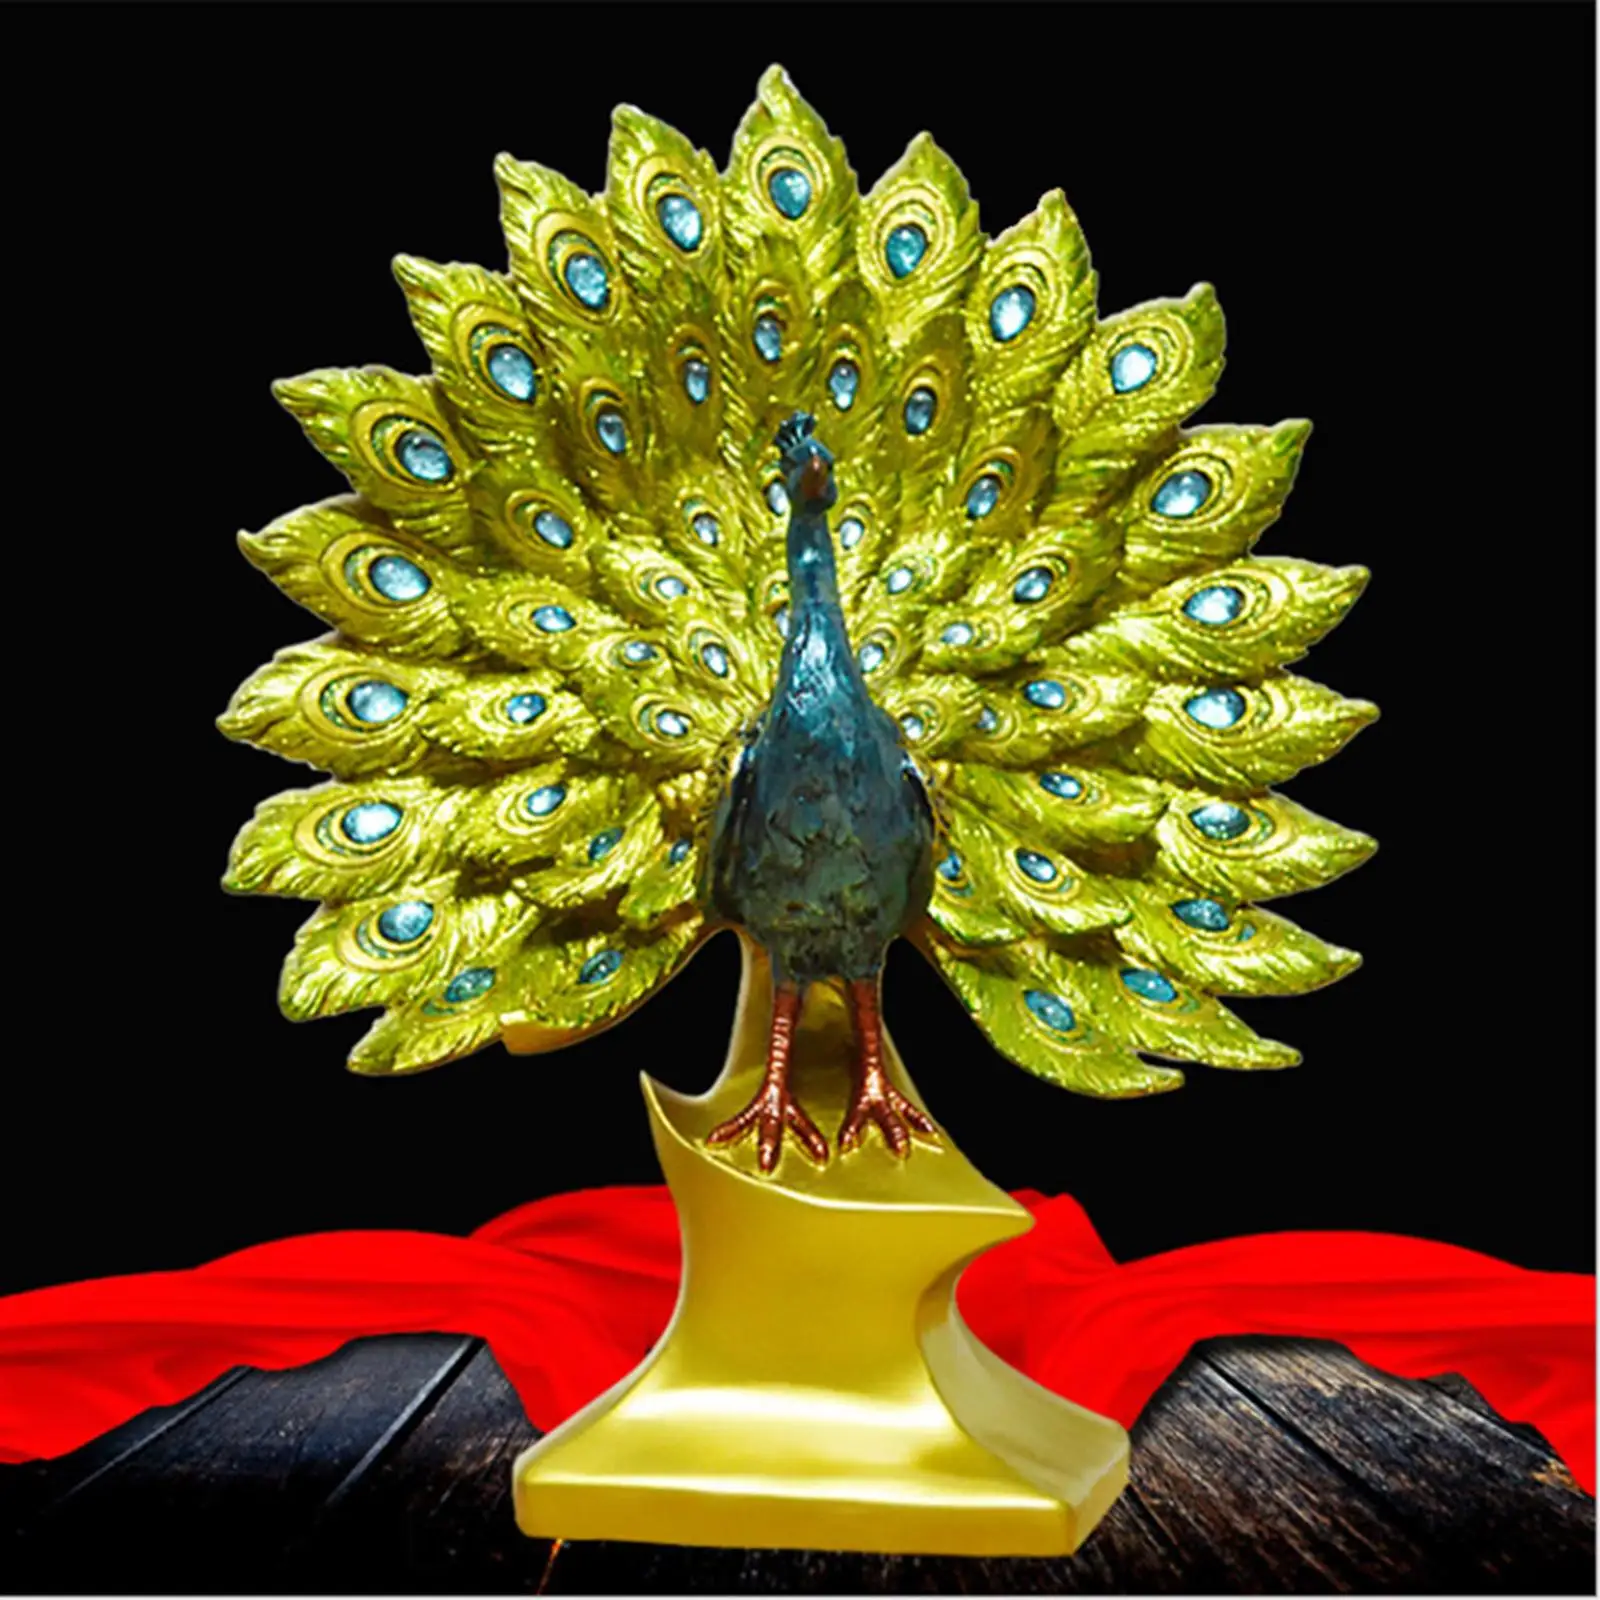 Resin Art Peacock Figurine Sculpture Ornament Miniature Photo Props Decor